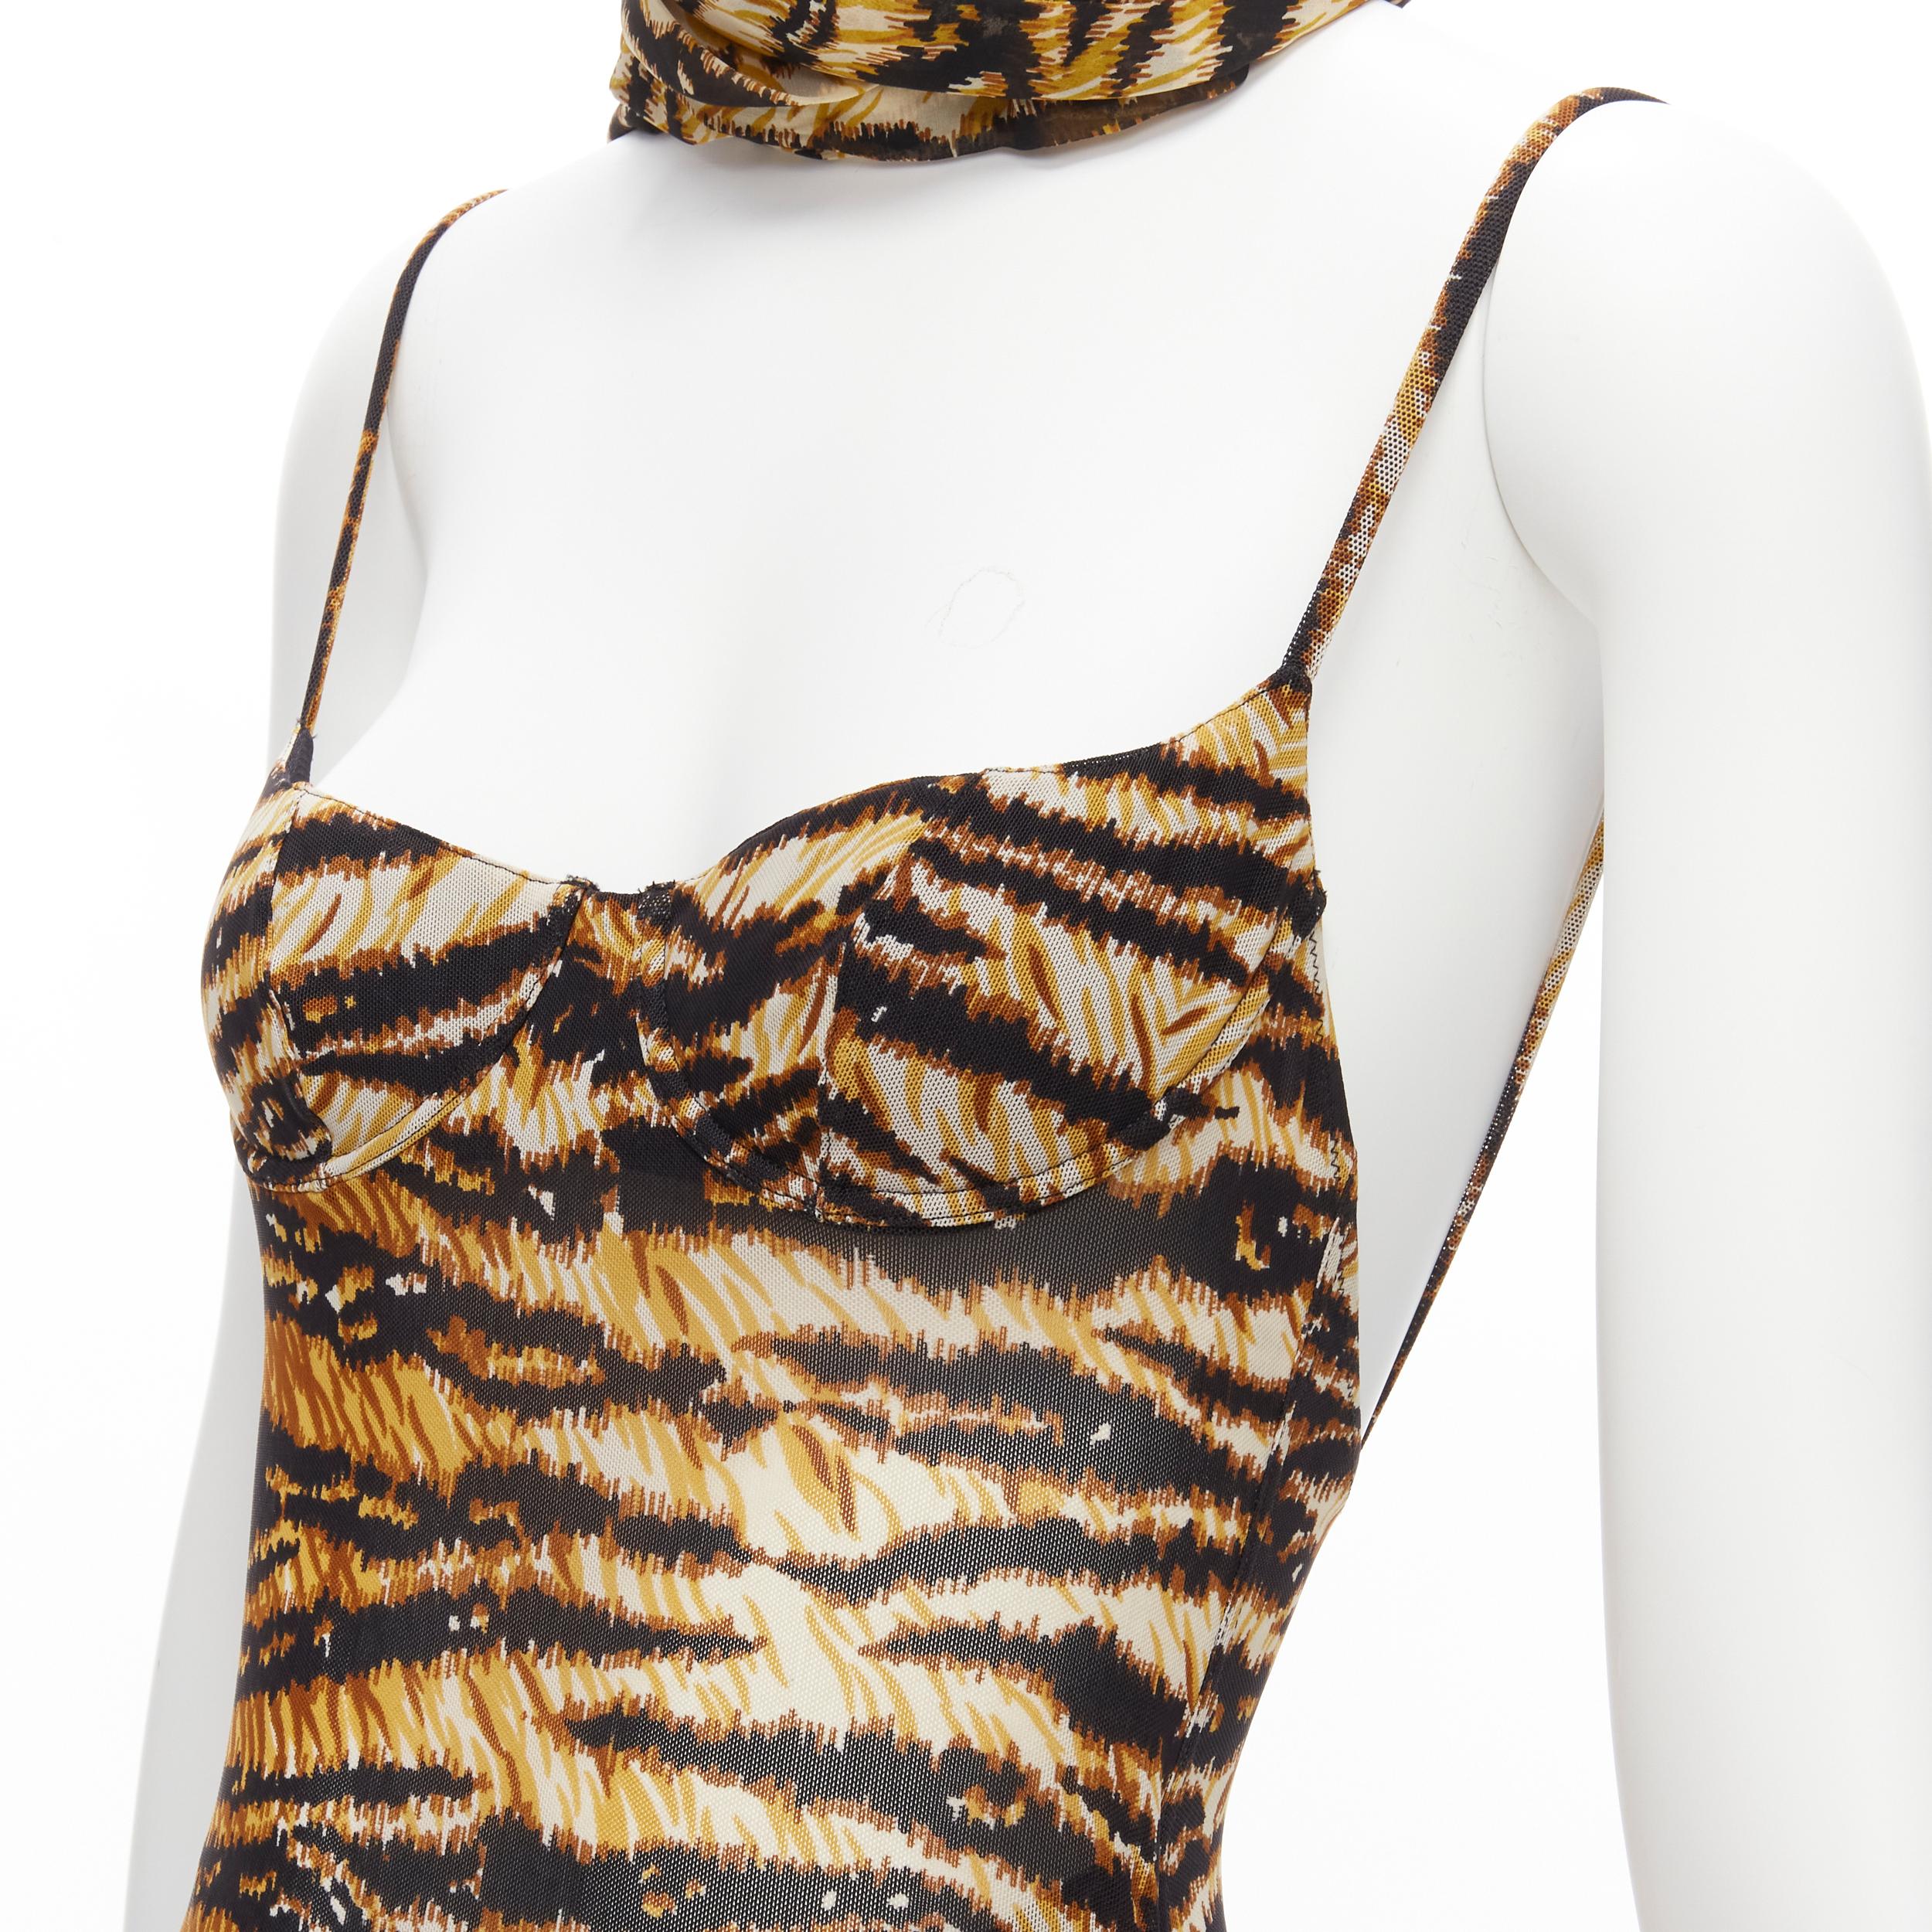 DOLCE GABBANA MARE Vintage brown tiger print mesh bustier bodysuit wrap skirt scarf S
Reference: TGAS/D00344
Brand: Dolce Gabbana
Designer: Domenico Dolce and Stefano Gabbana
Material: Polyamide, Lycra
Color: Brown, Black
Pattern: Leopard
Closure: